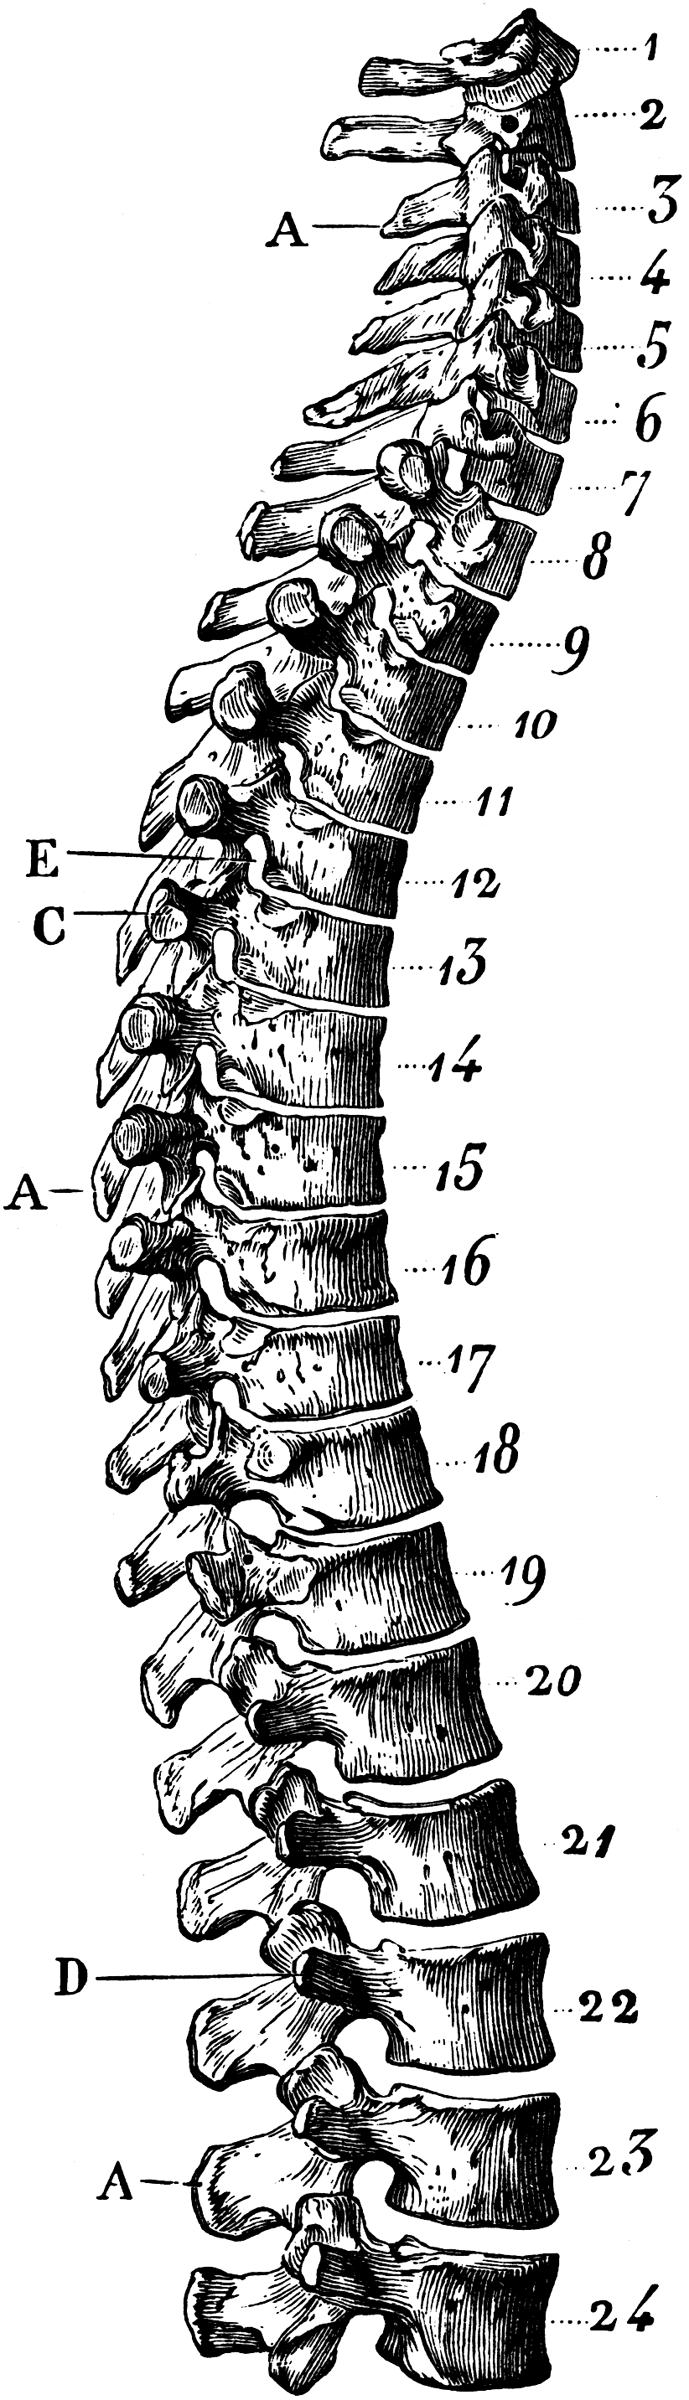 Human Spinal Column | ClipArt ETC